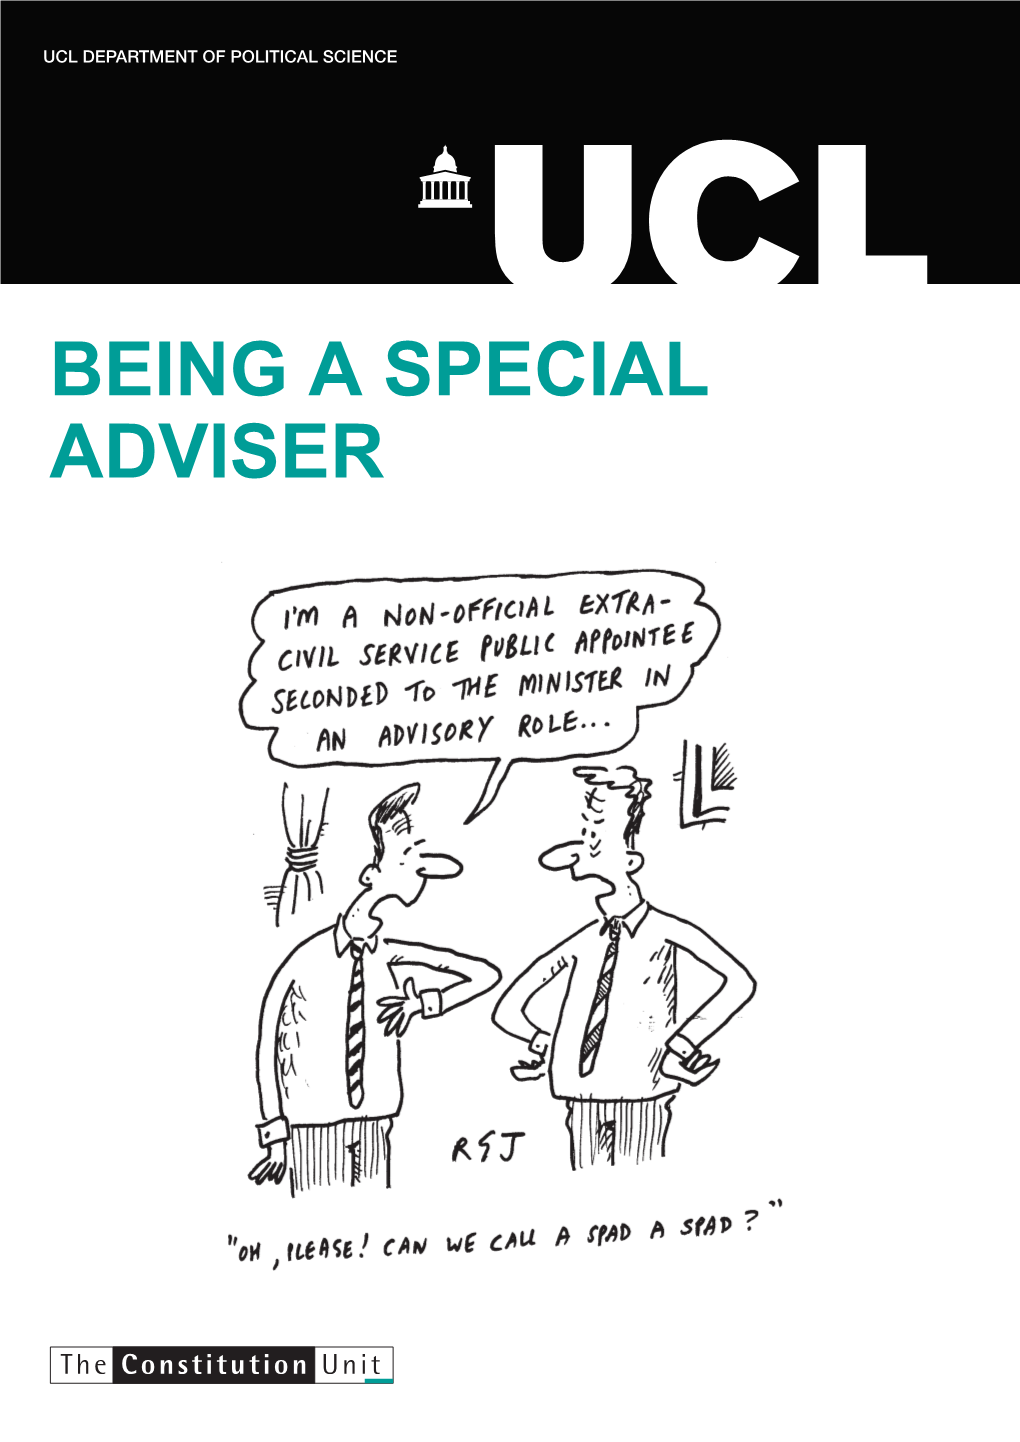 Constitution Unit Handbook: Being a Special Adviser